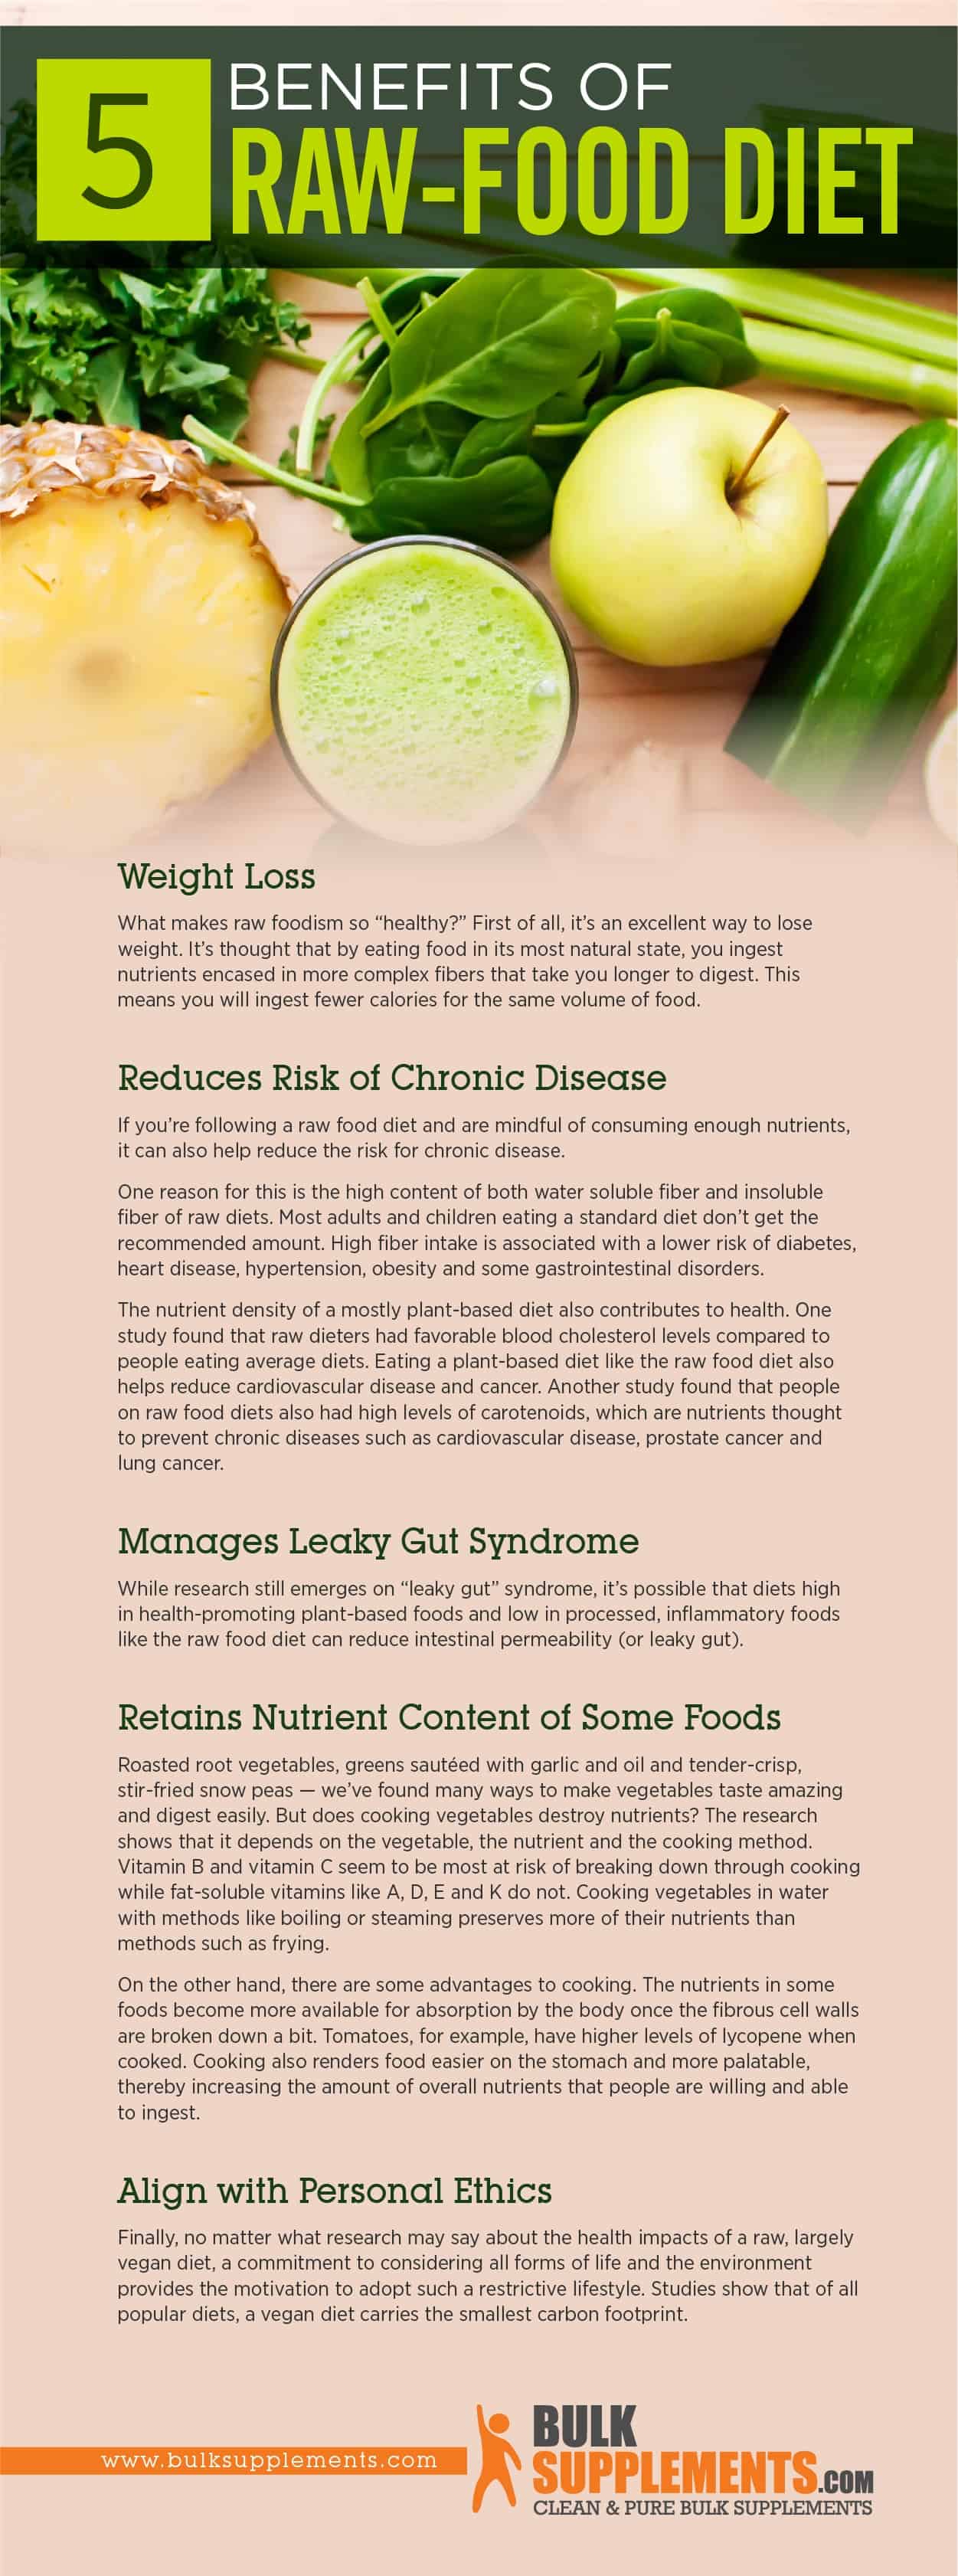 Raw-Food Diet Benefits